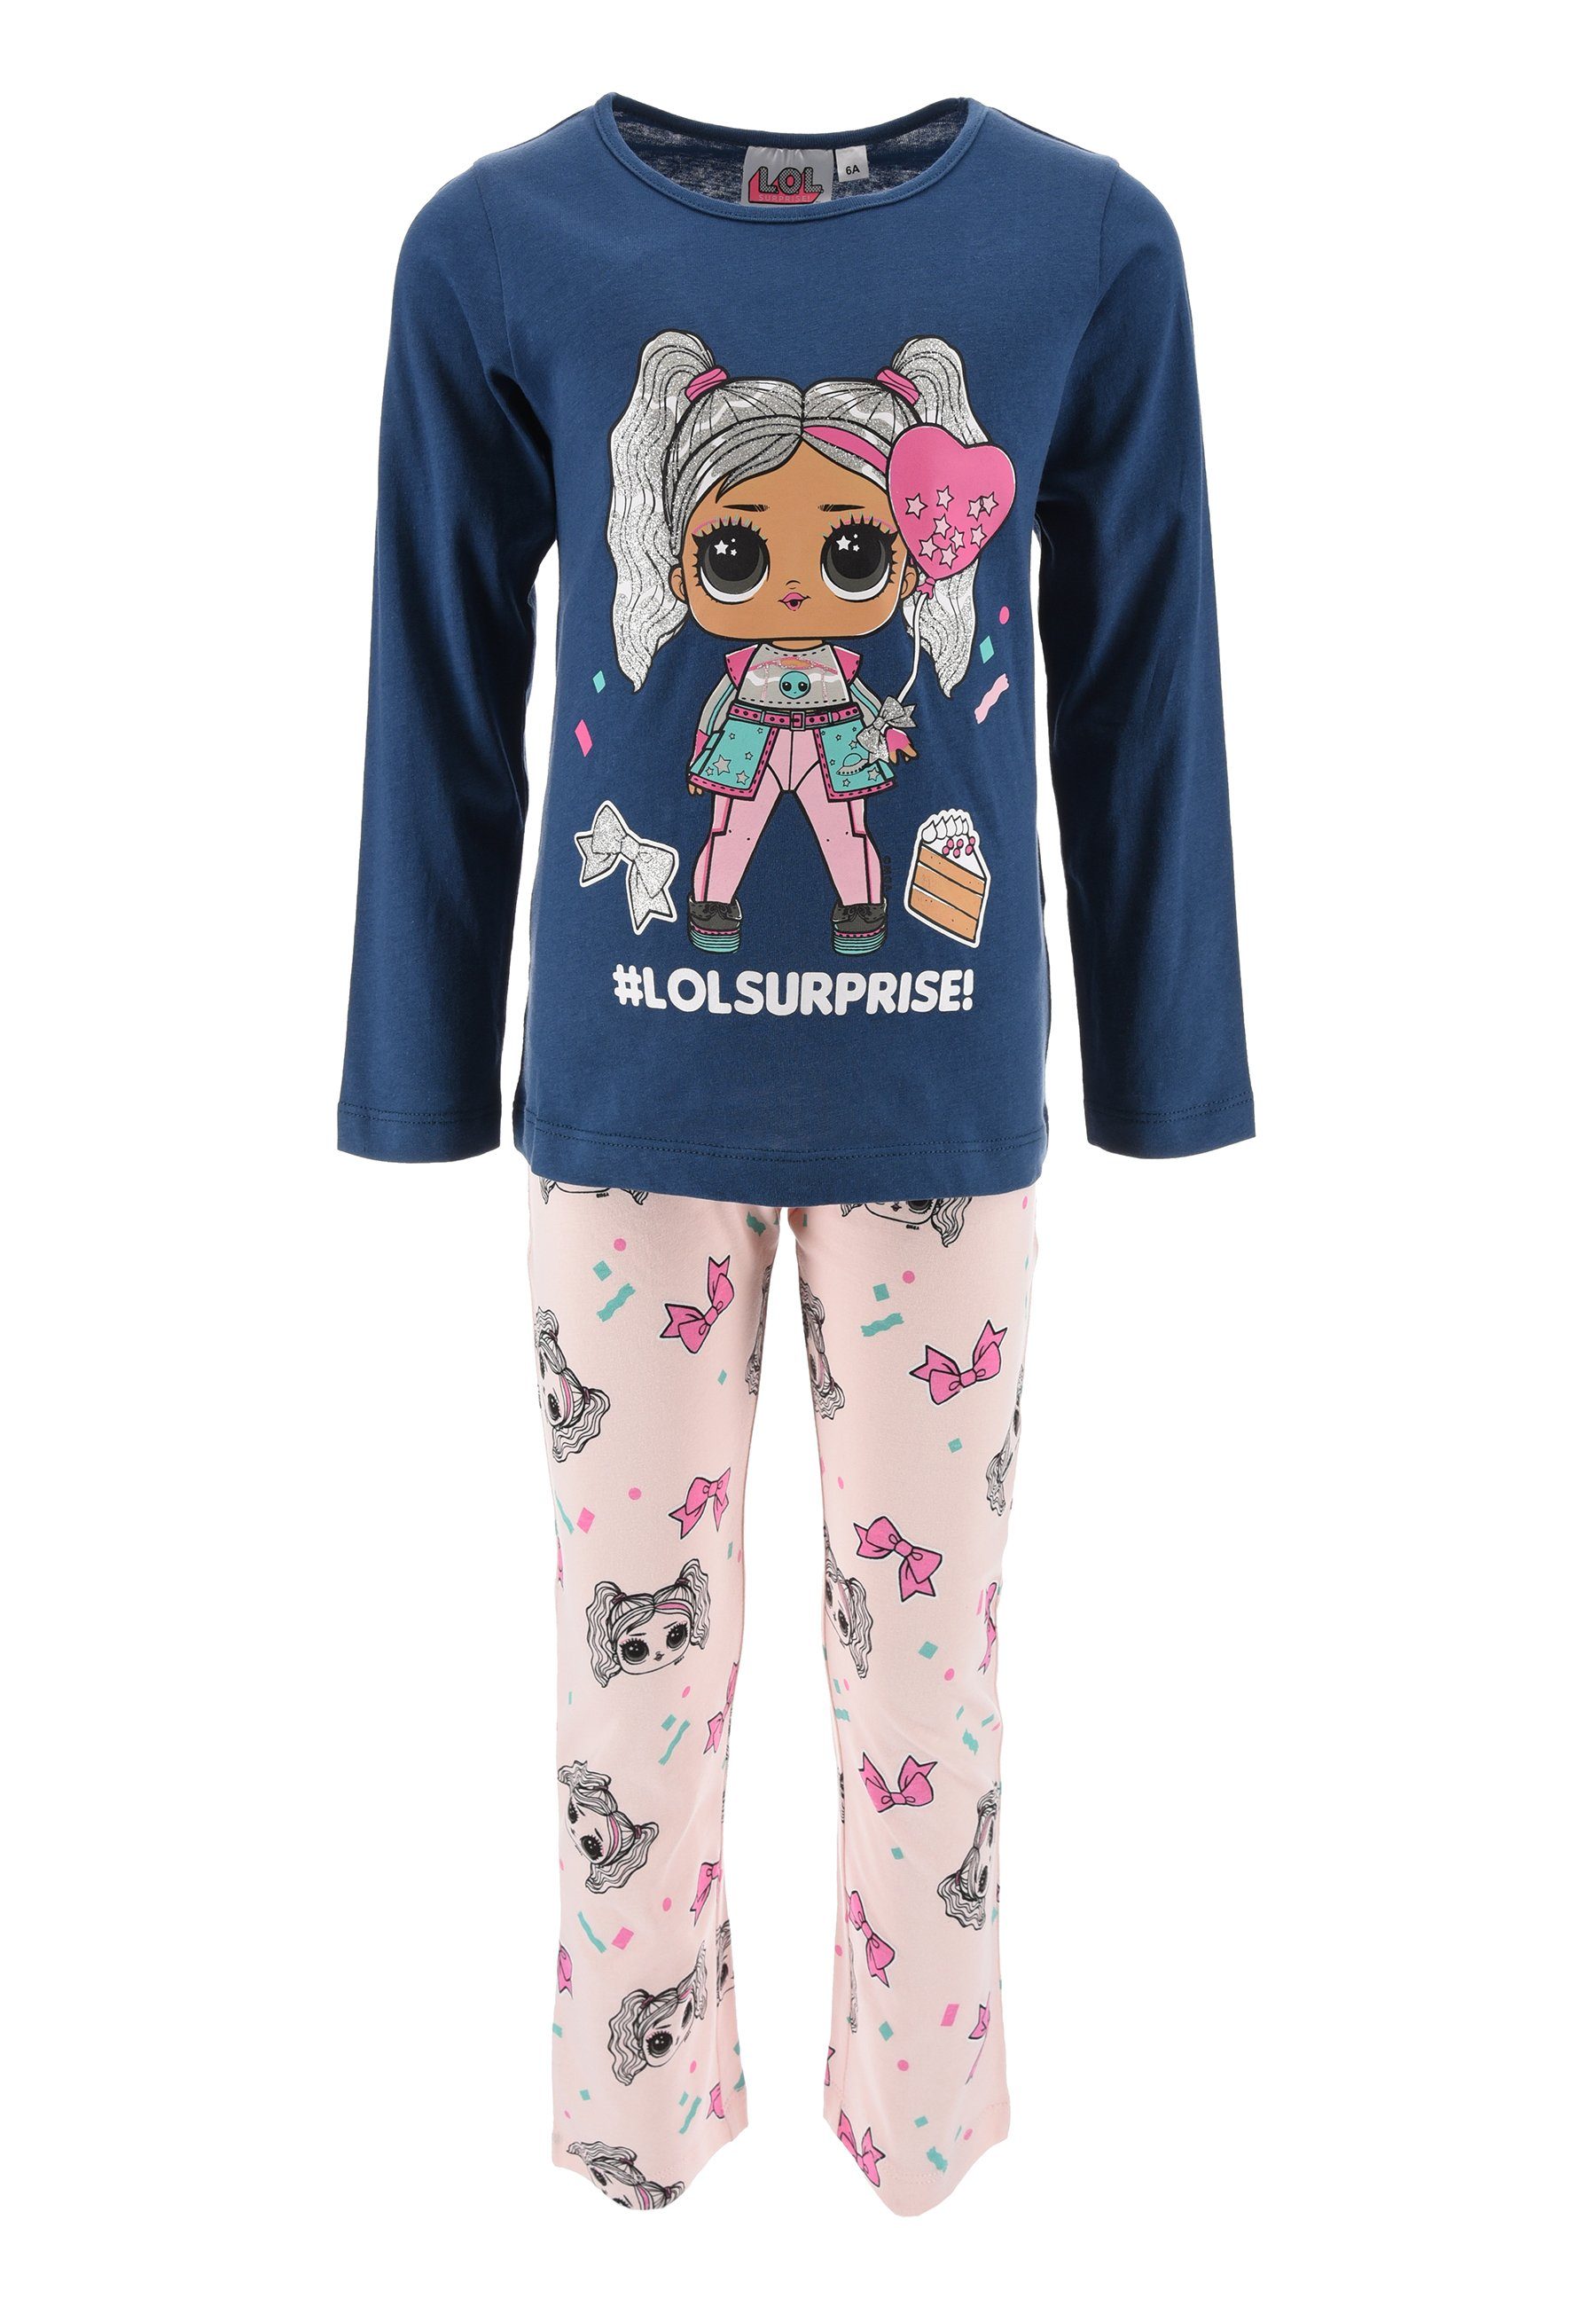 L.O.L. SURPRISE! Schlafanzug Kinder Mädchen Schlafanzug Kinder Pyjama Langarm Shirt + Schlaf-Hose (2 tlg) Dunkel-Blau | Pyjamas